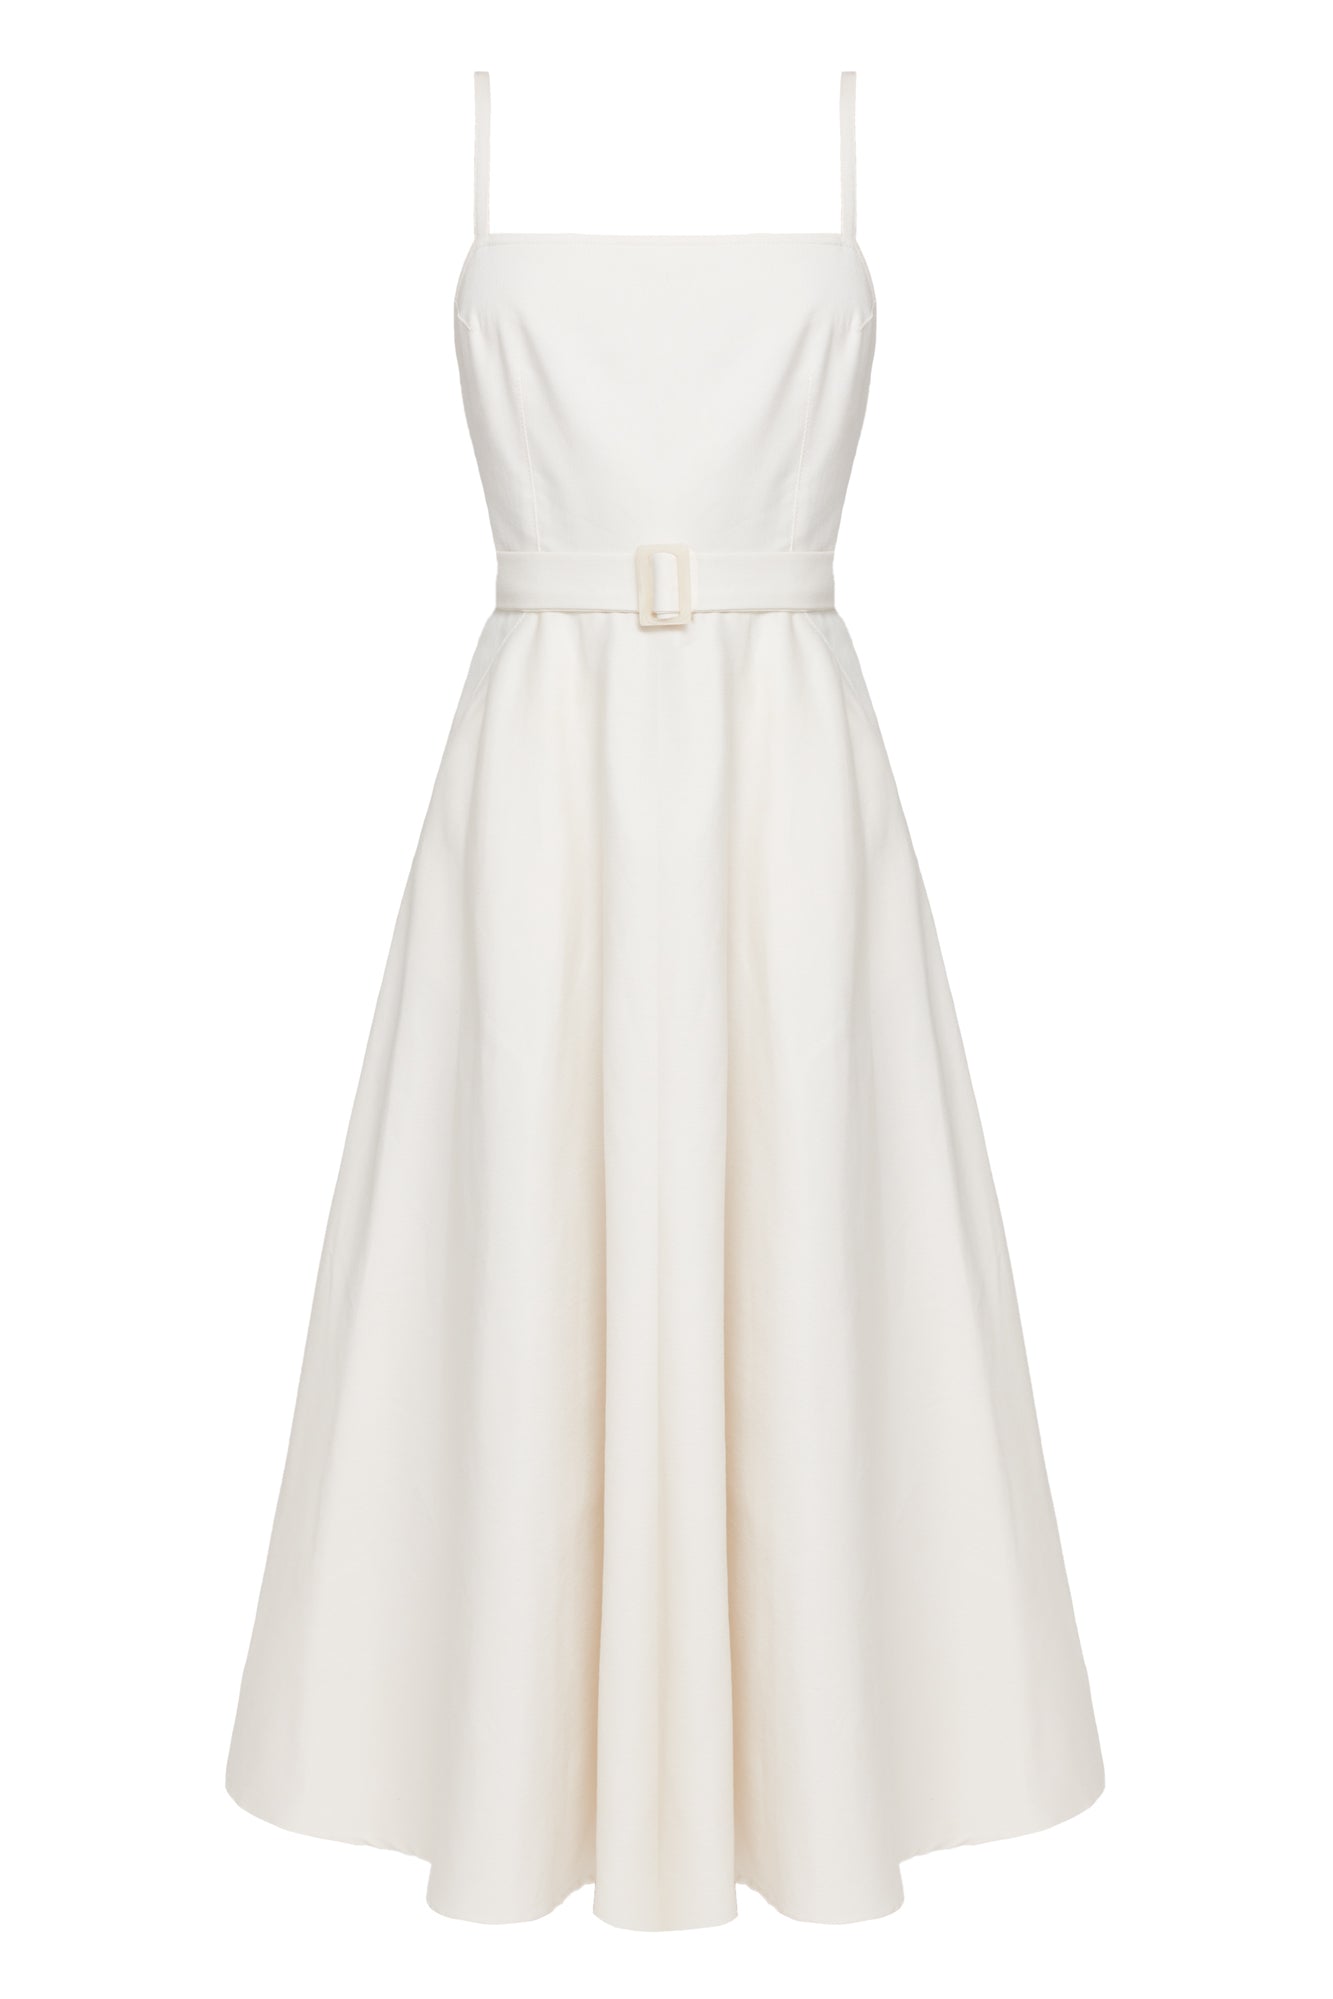 MATISSA Off-White Denim Dress - Sophisticated Midi Length